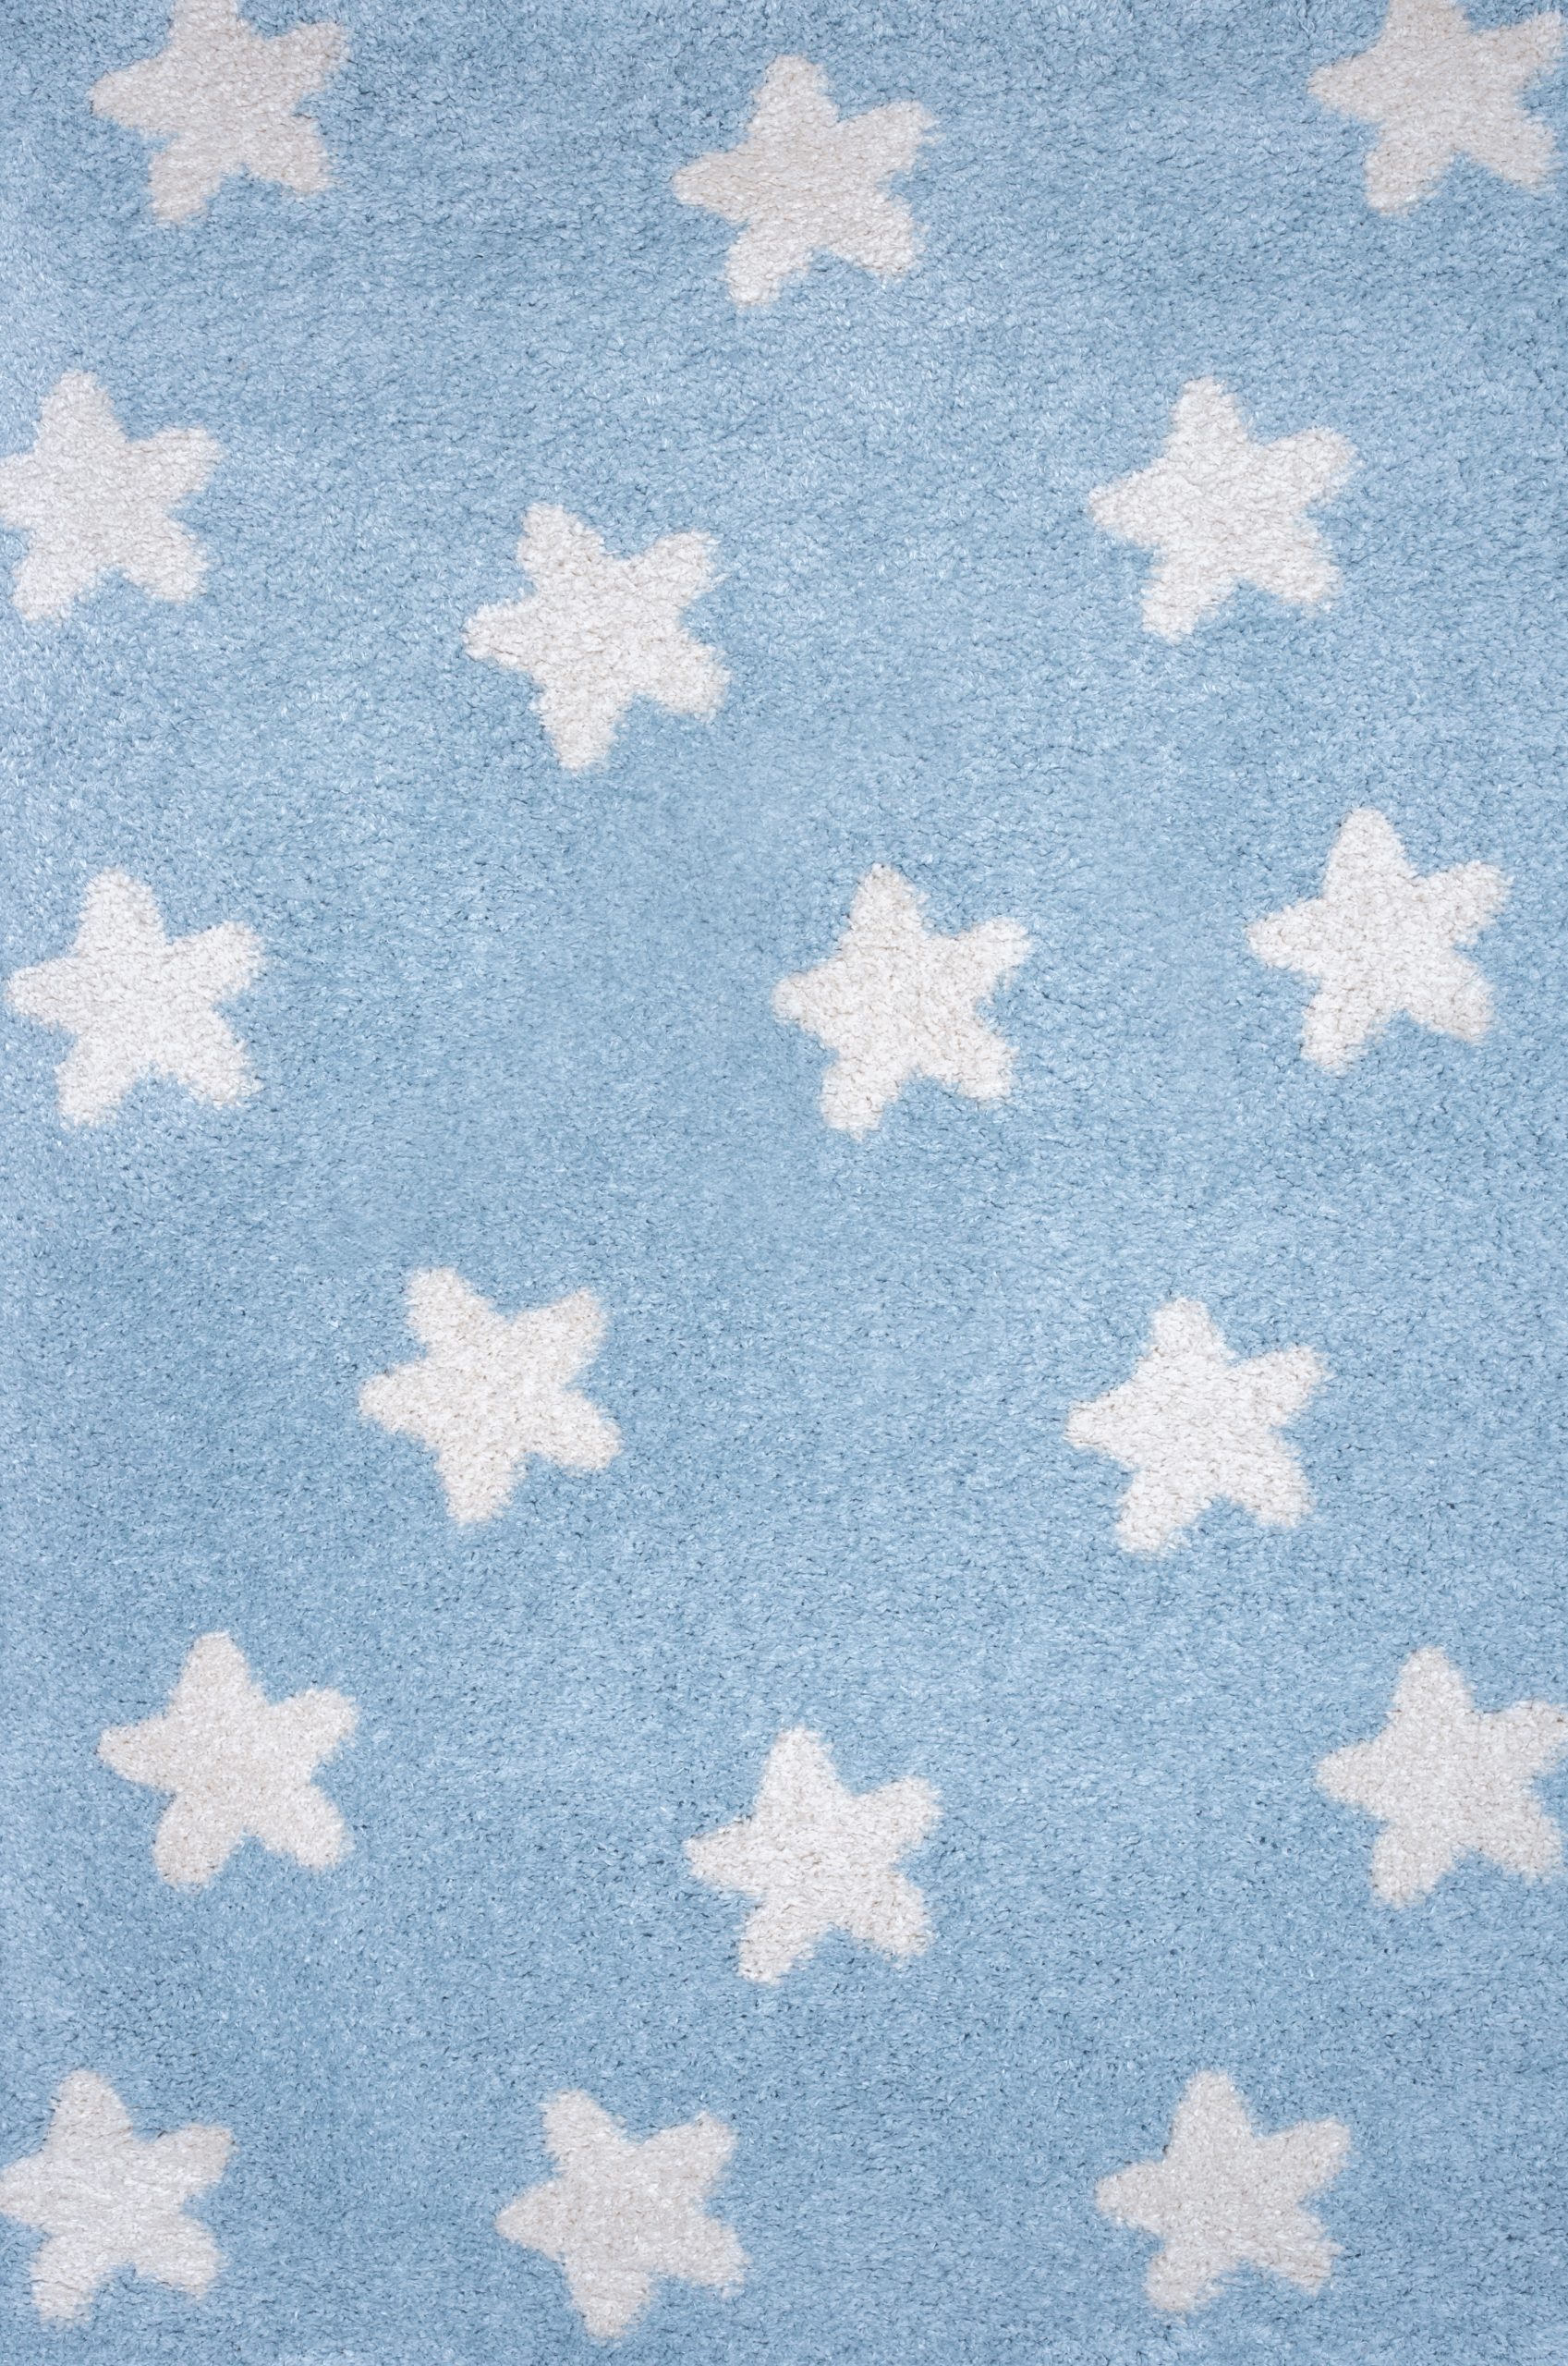 Shaggy παιδικό χαλί Cocoon 8391/30 γαλάζιο με αστεράκια - ΡΟΤΟΝΤΑ  1,60x1,60 Colore Colori